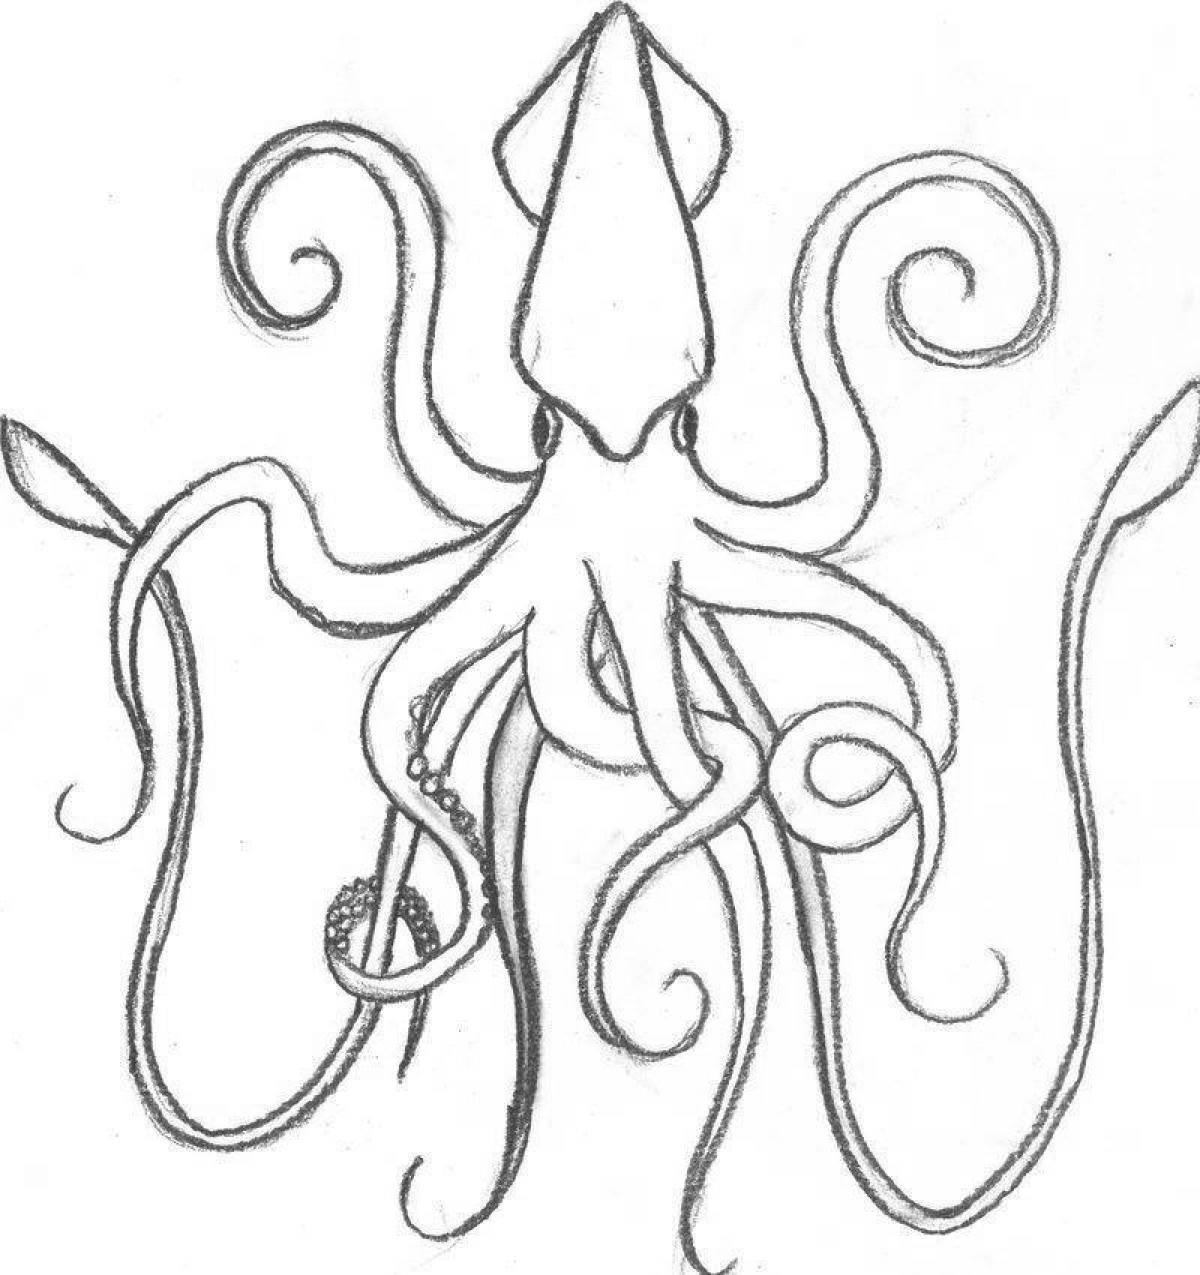 Delightful squid coloring